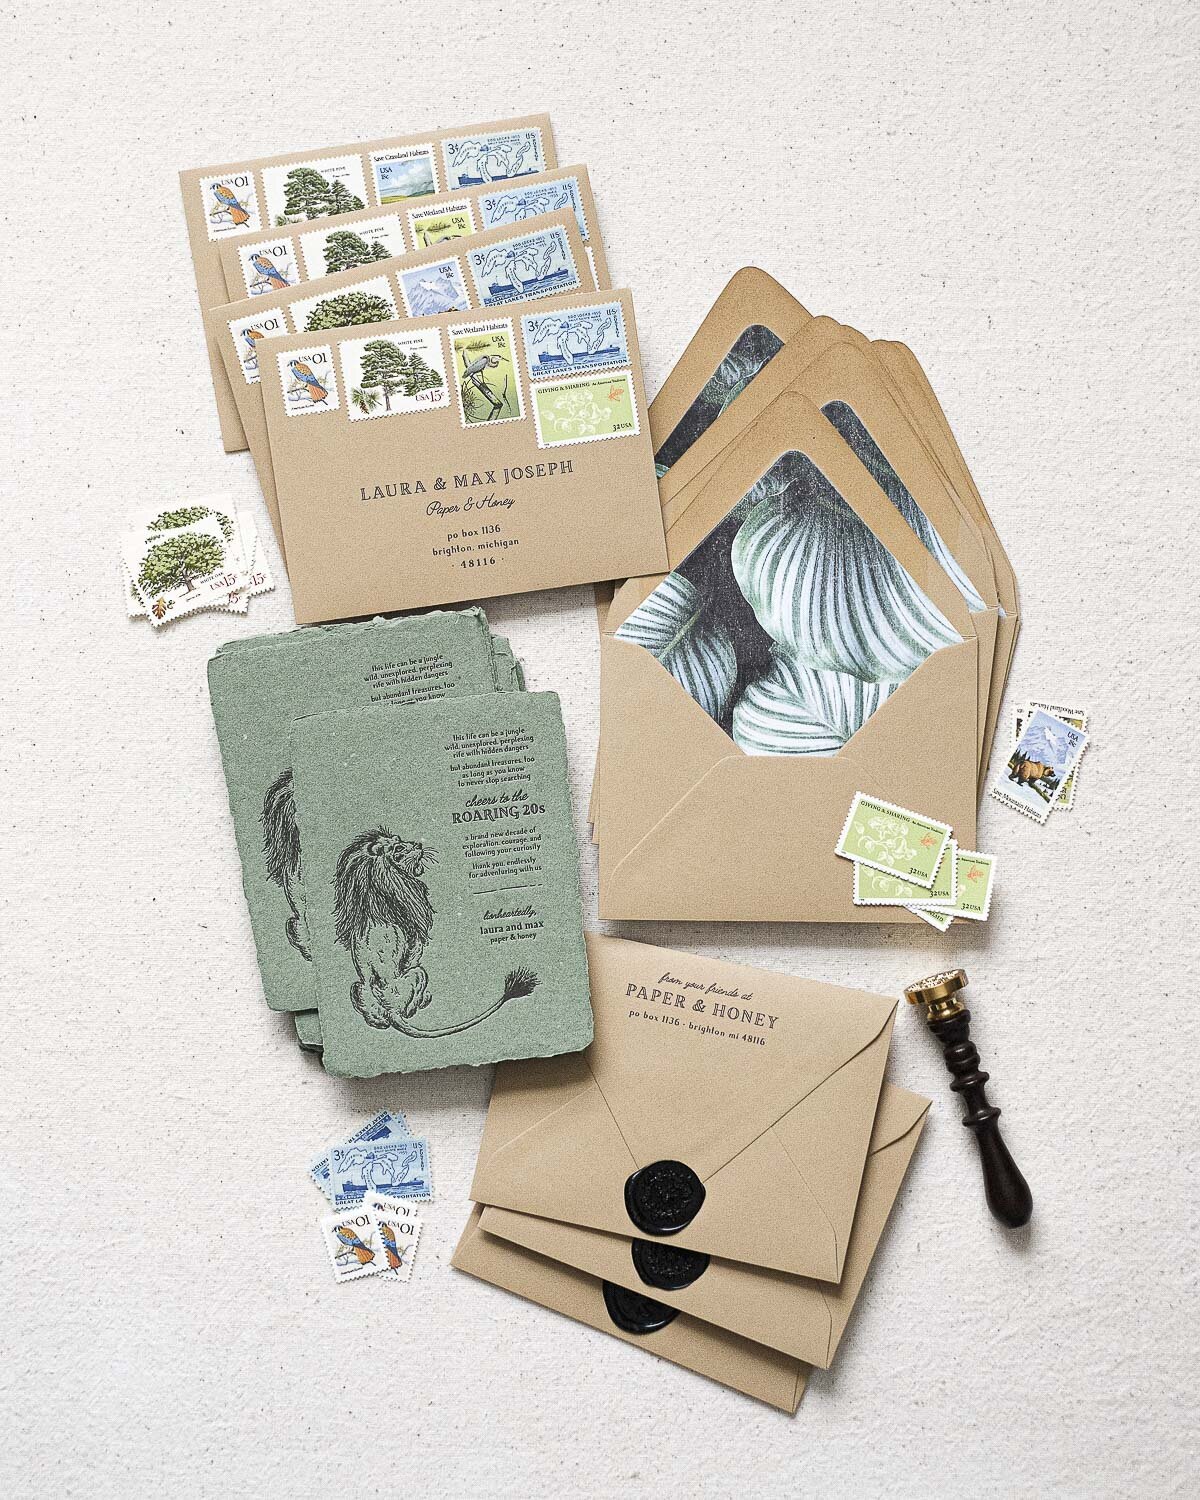 michigan-letterpress-wedding-invitations-custom-invites-save-dates-paper-honey-06